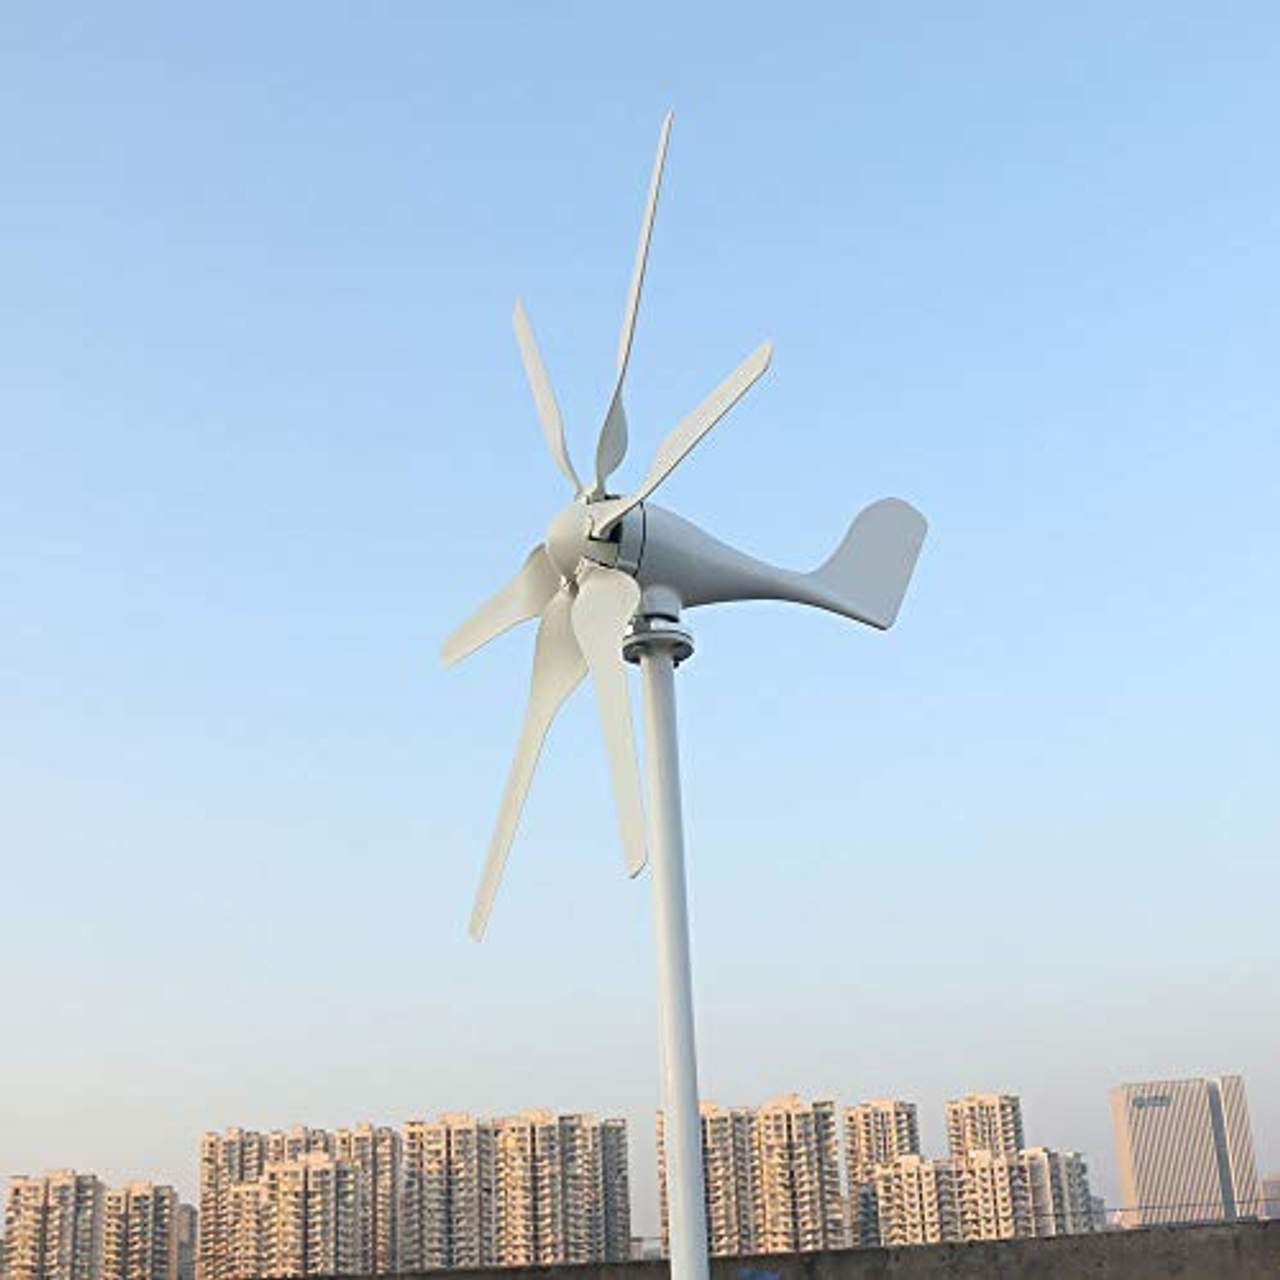 12V 800W Windgenerator Windkraftanlage Horizontaler Windturbine